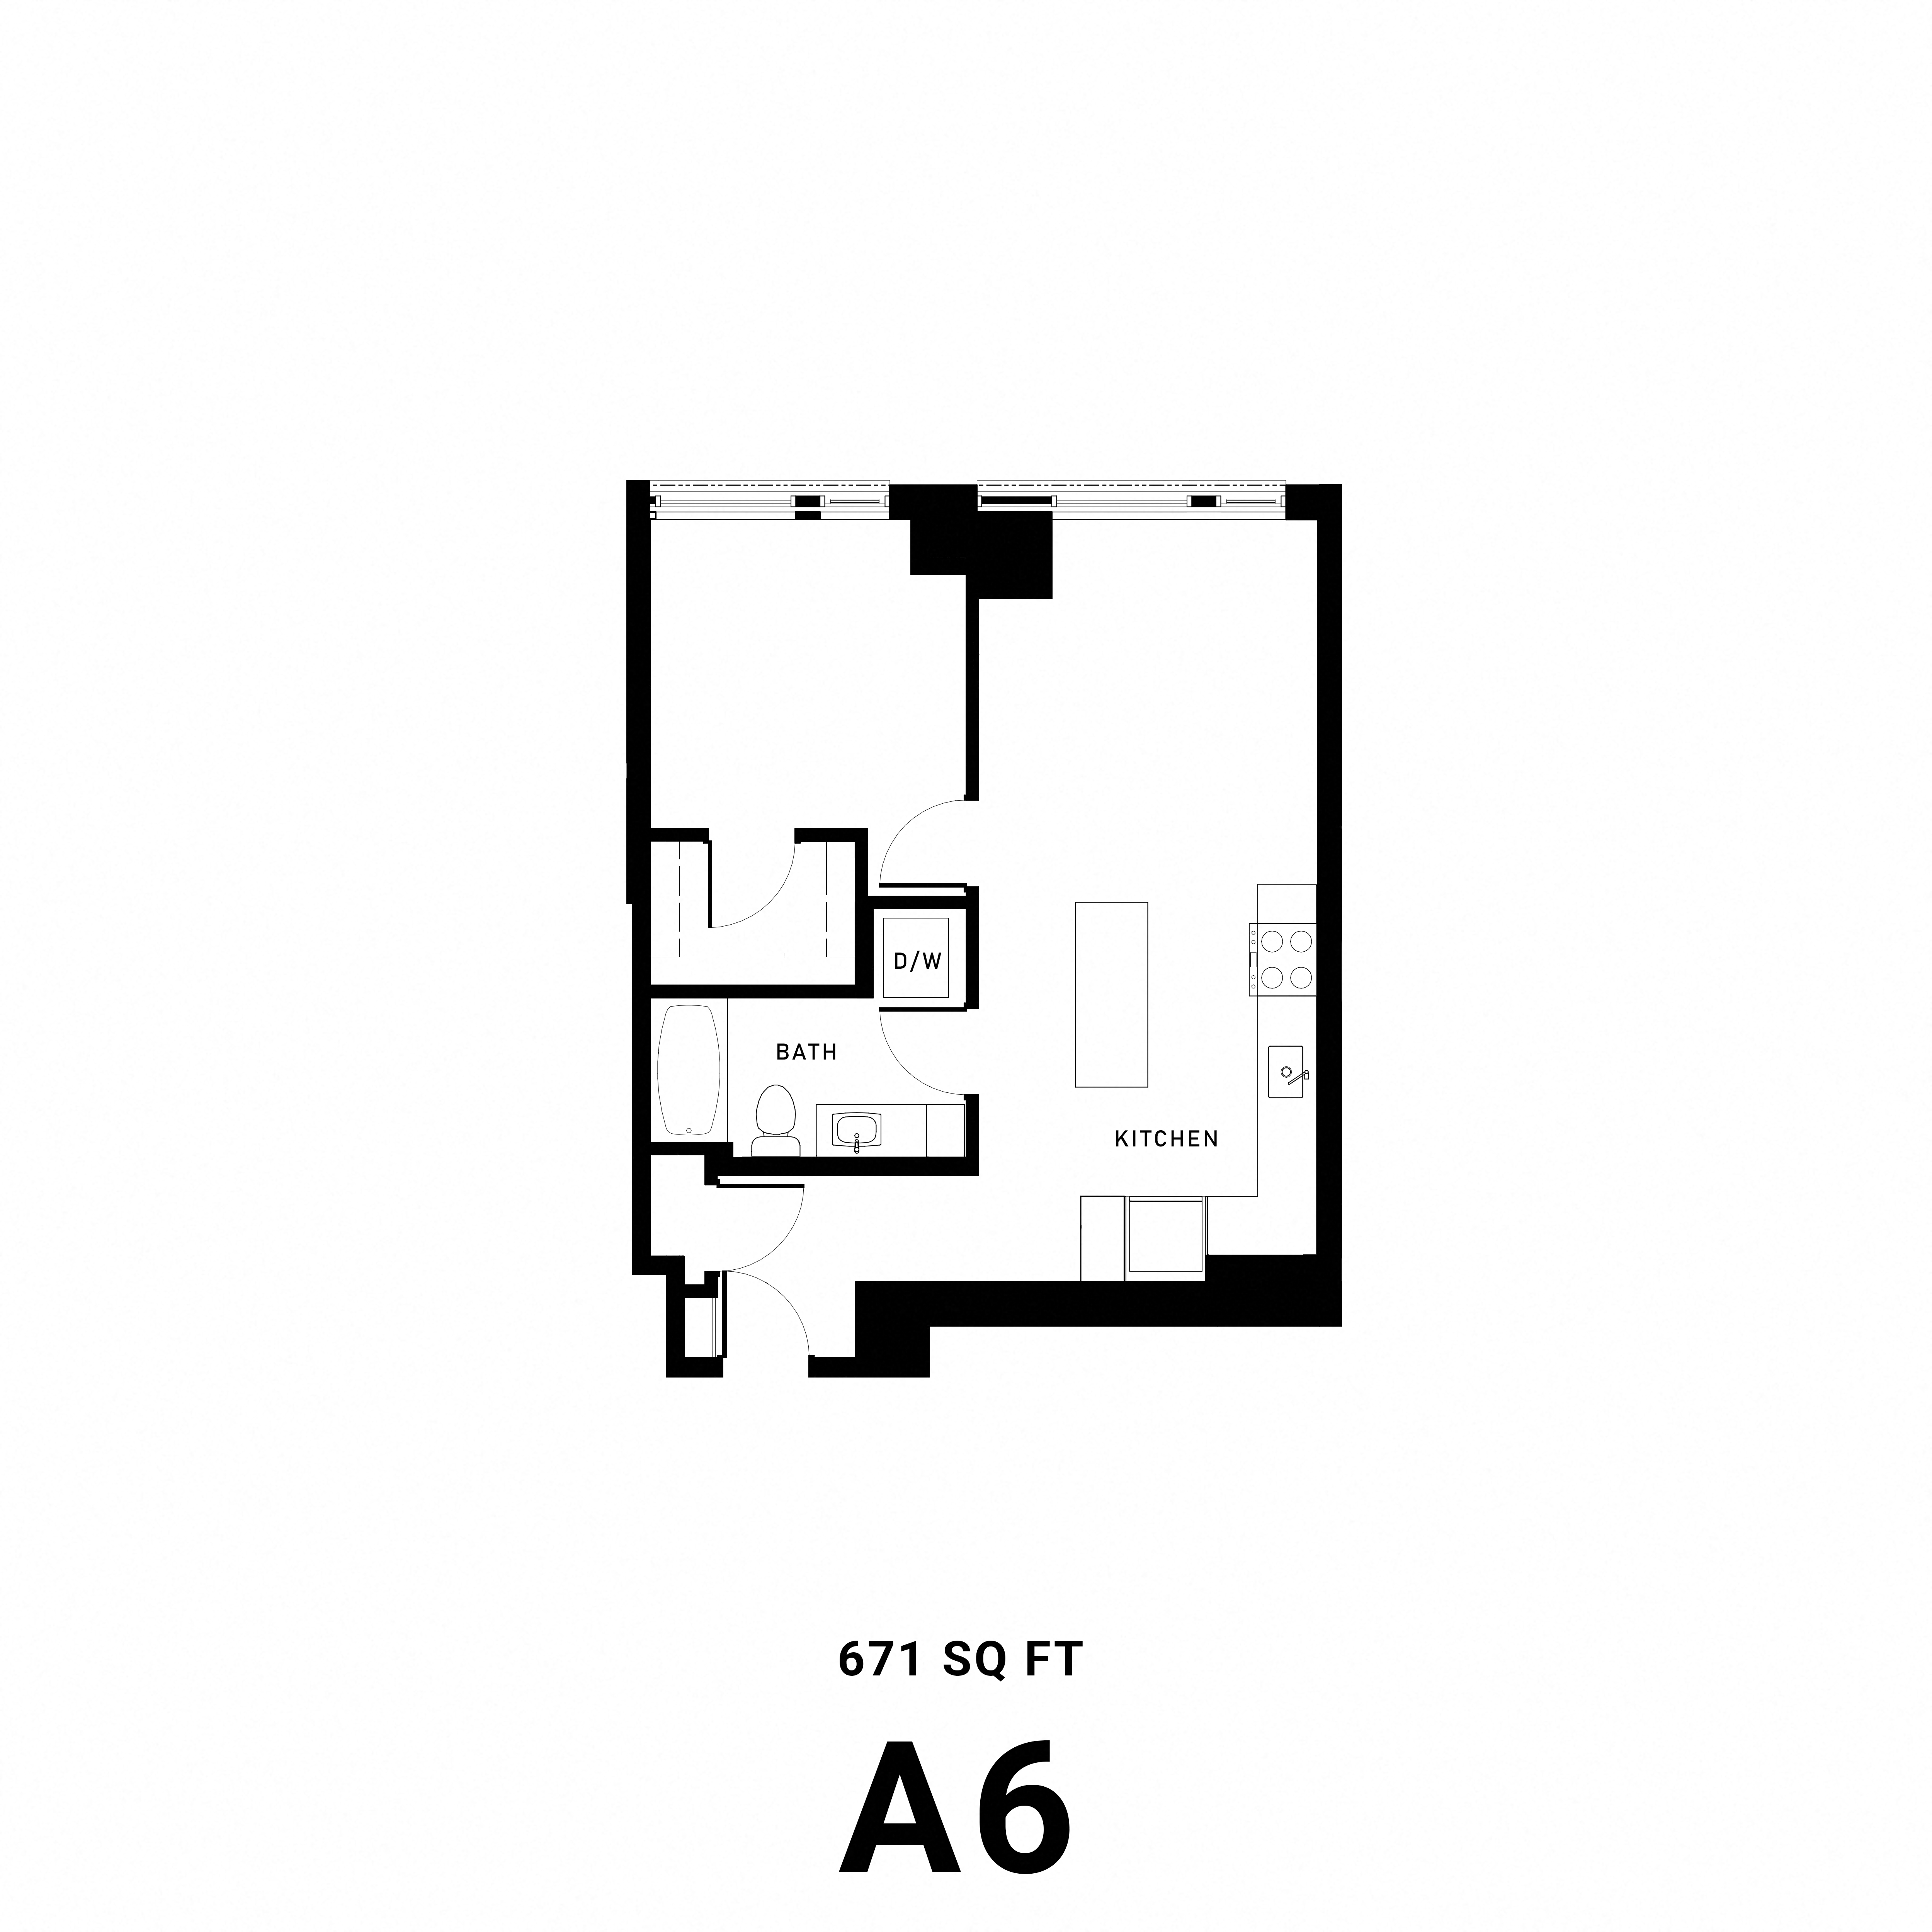 Floorplan A6